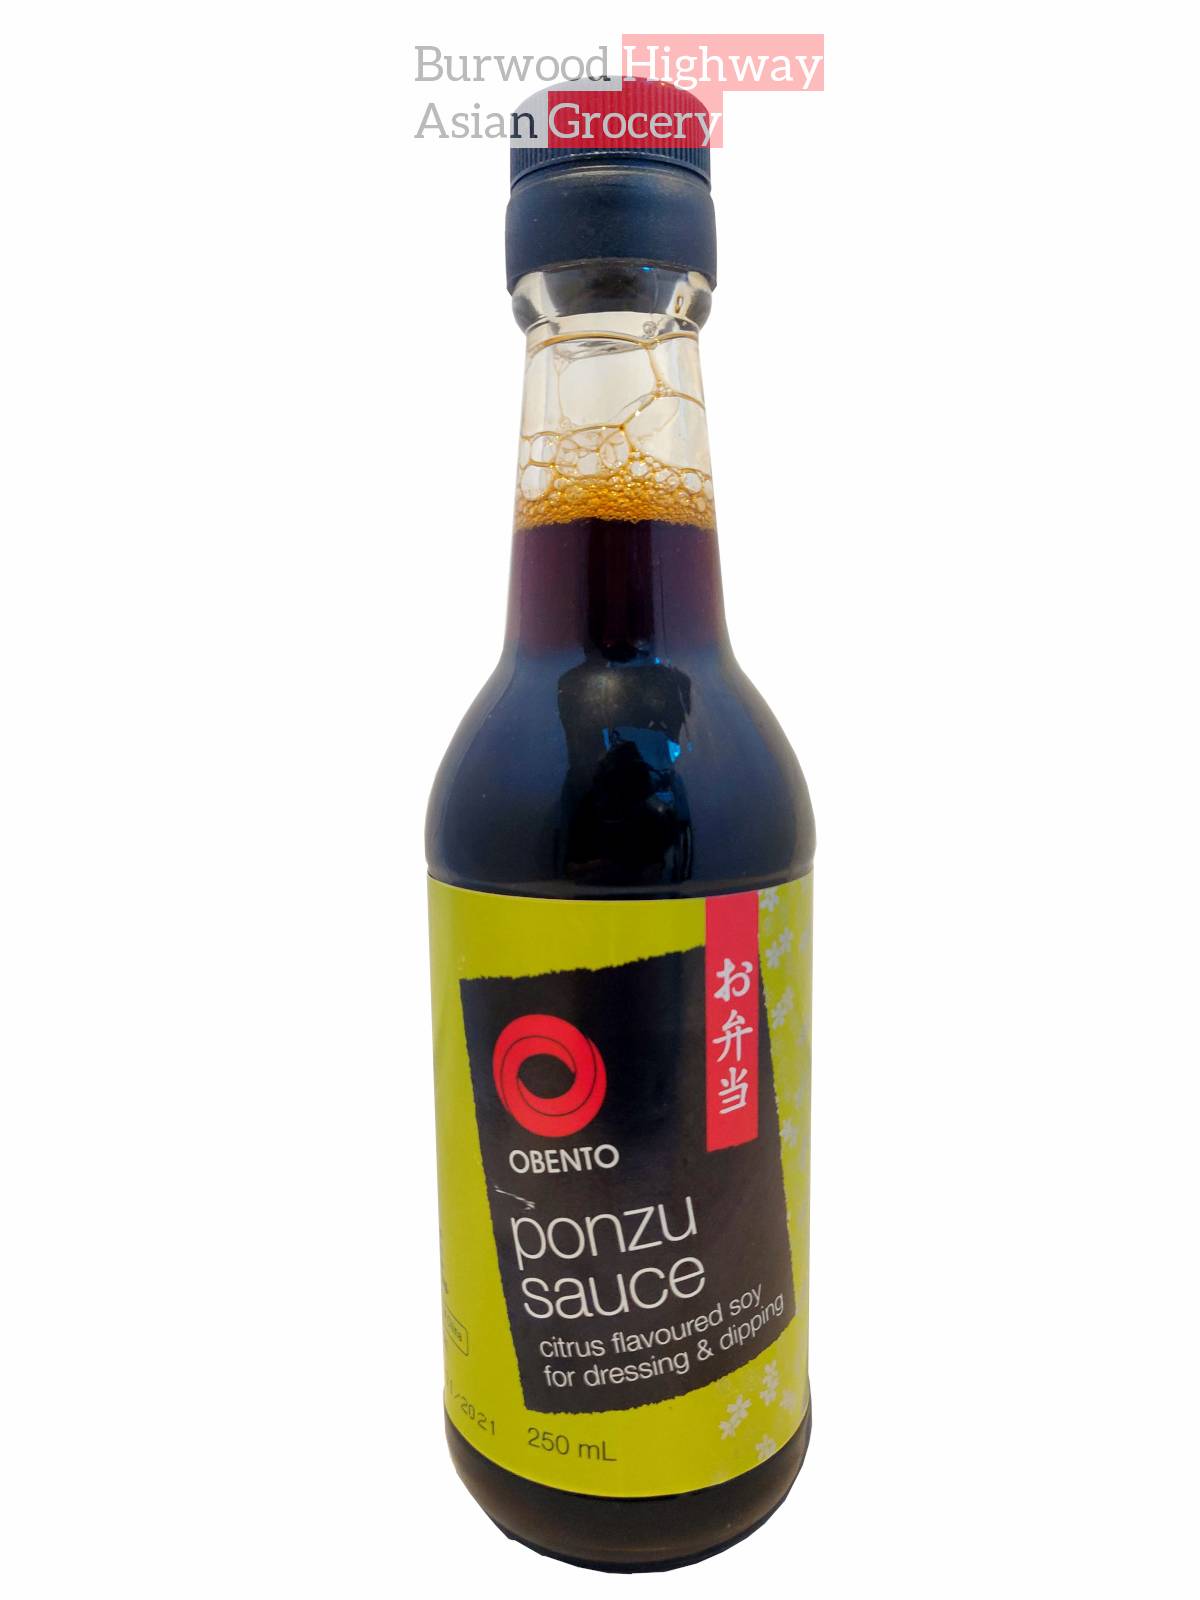 Obento Ponzu Sauce 250ml - Burwood Highway Asian Grocery